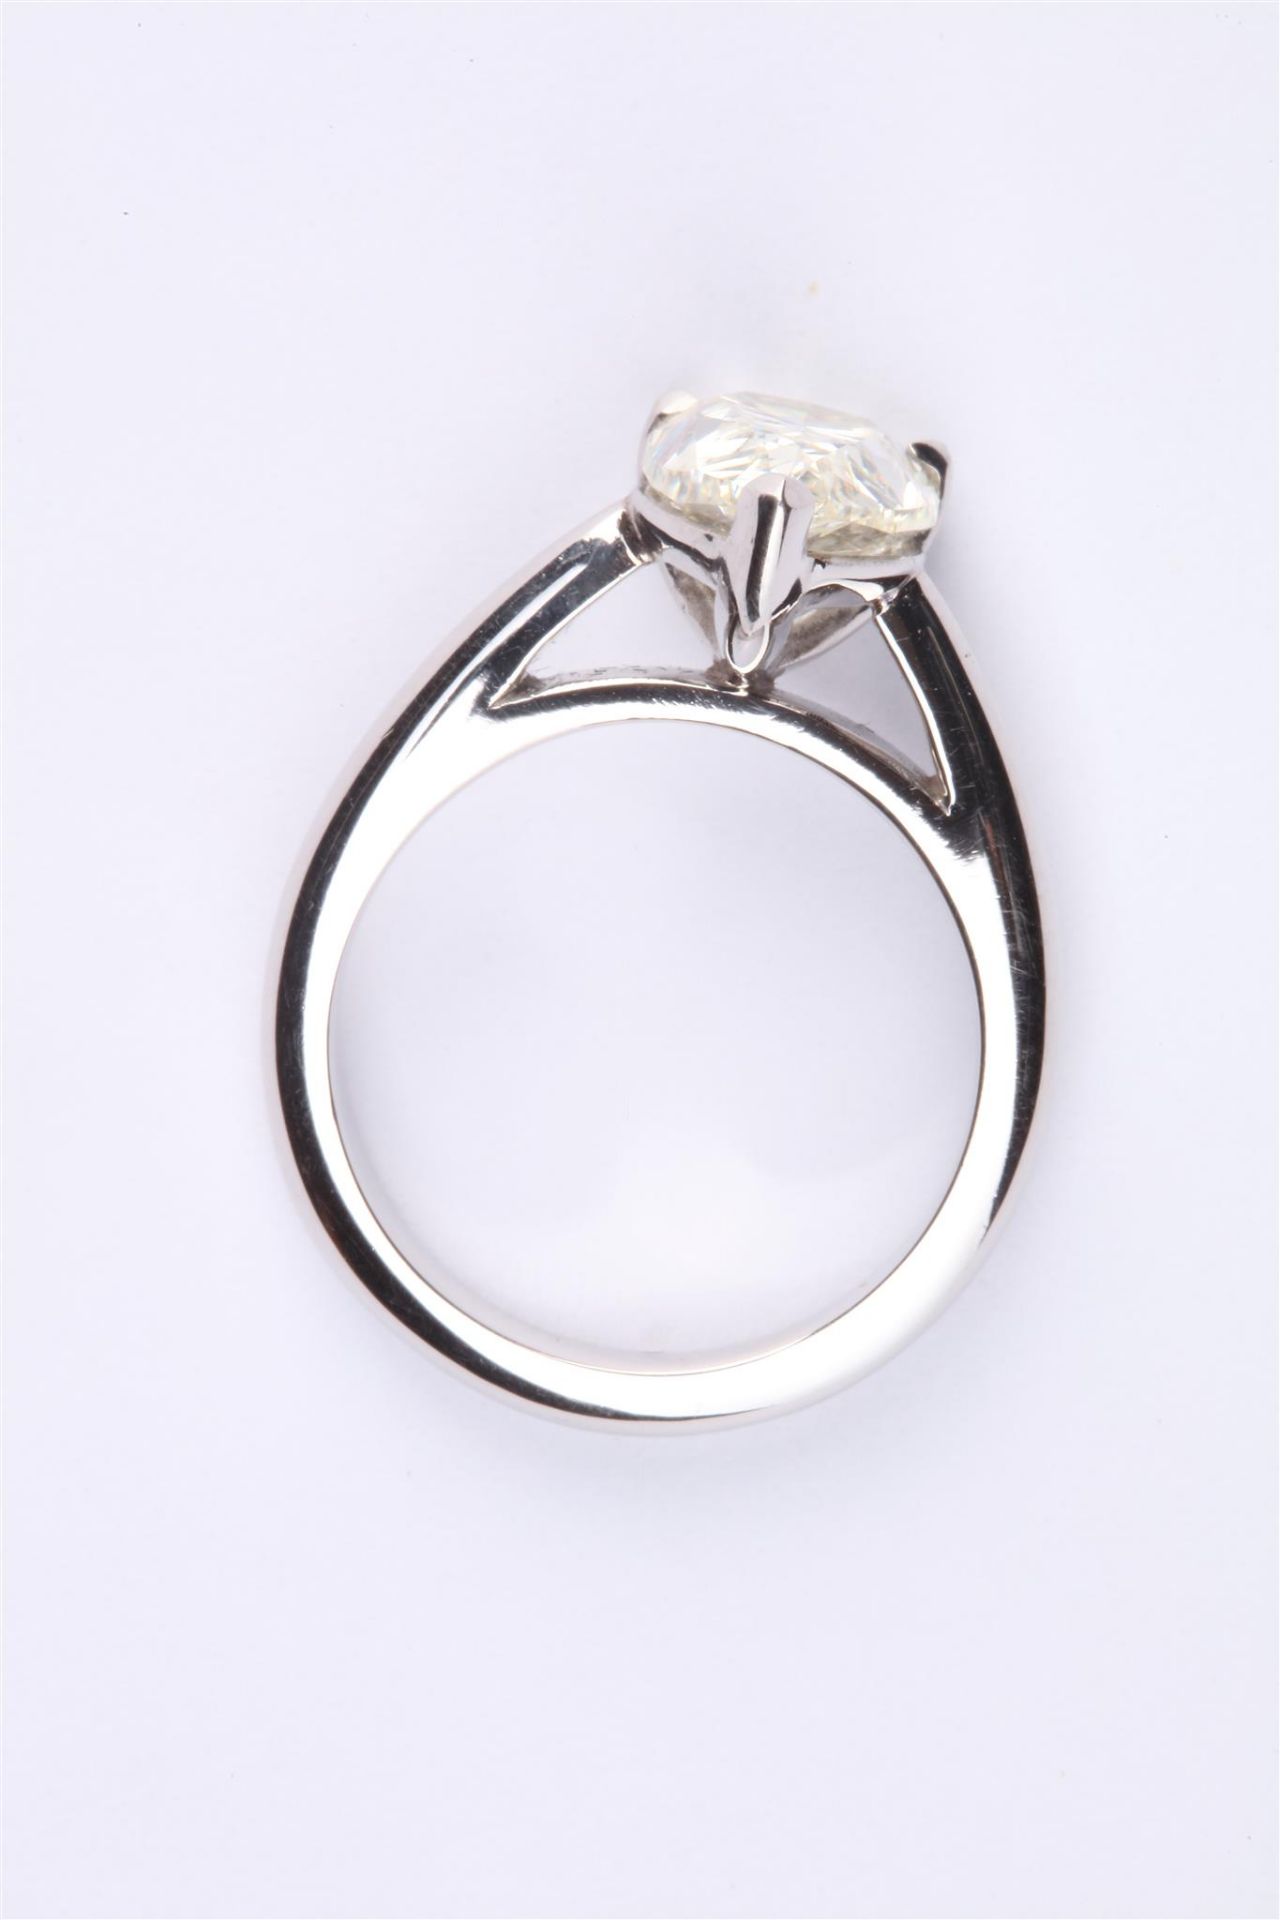 + VAT Stunning Ladies 18ct White Gold 3.28CT Tear Drop Diamond Ring (Heavy Mount) - Image 4 of 4